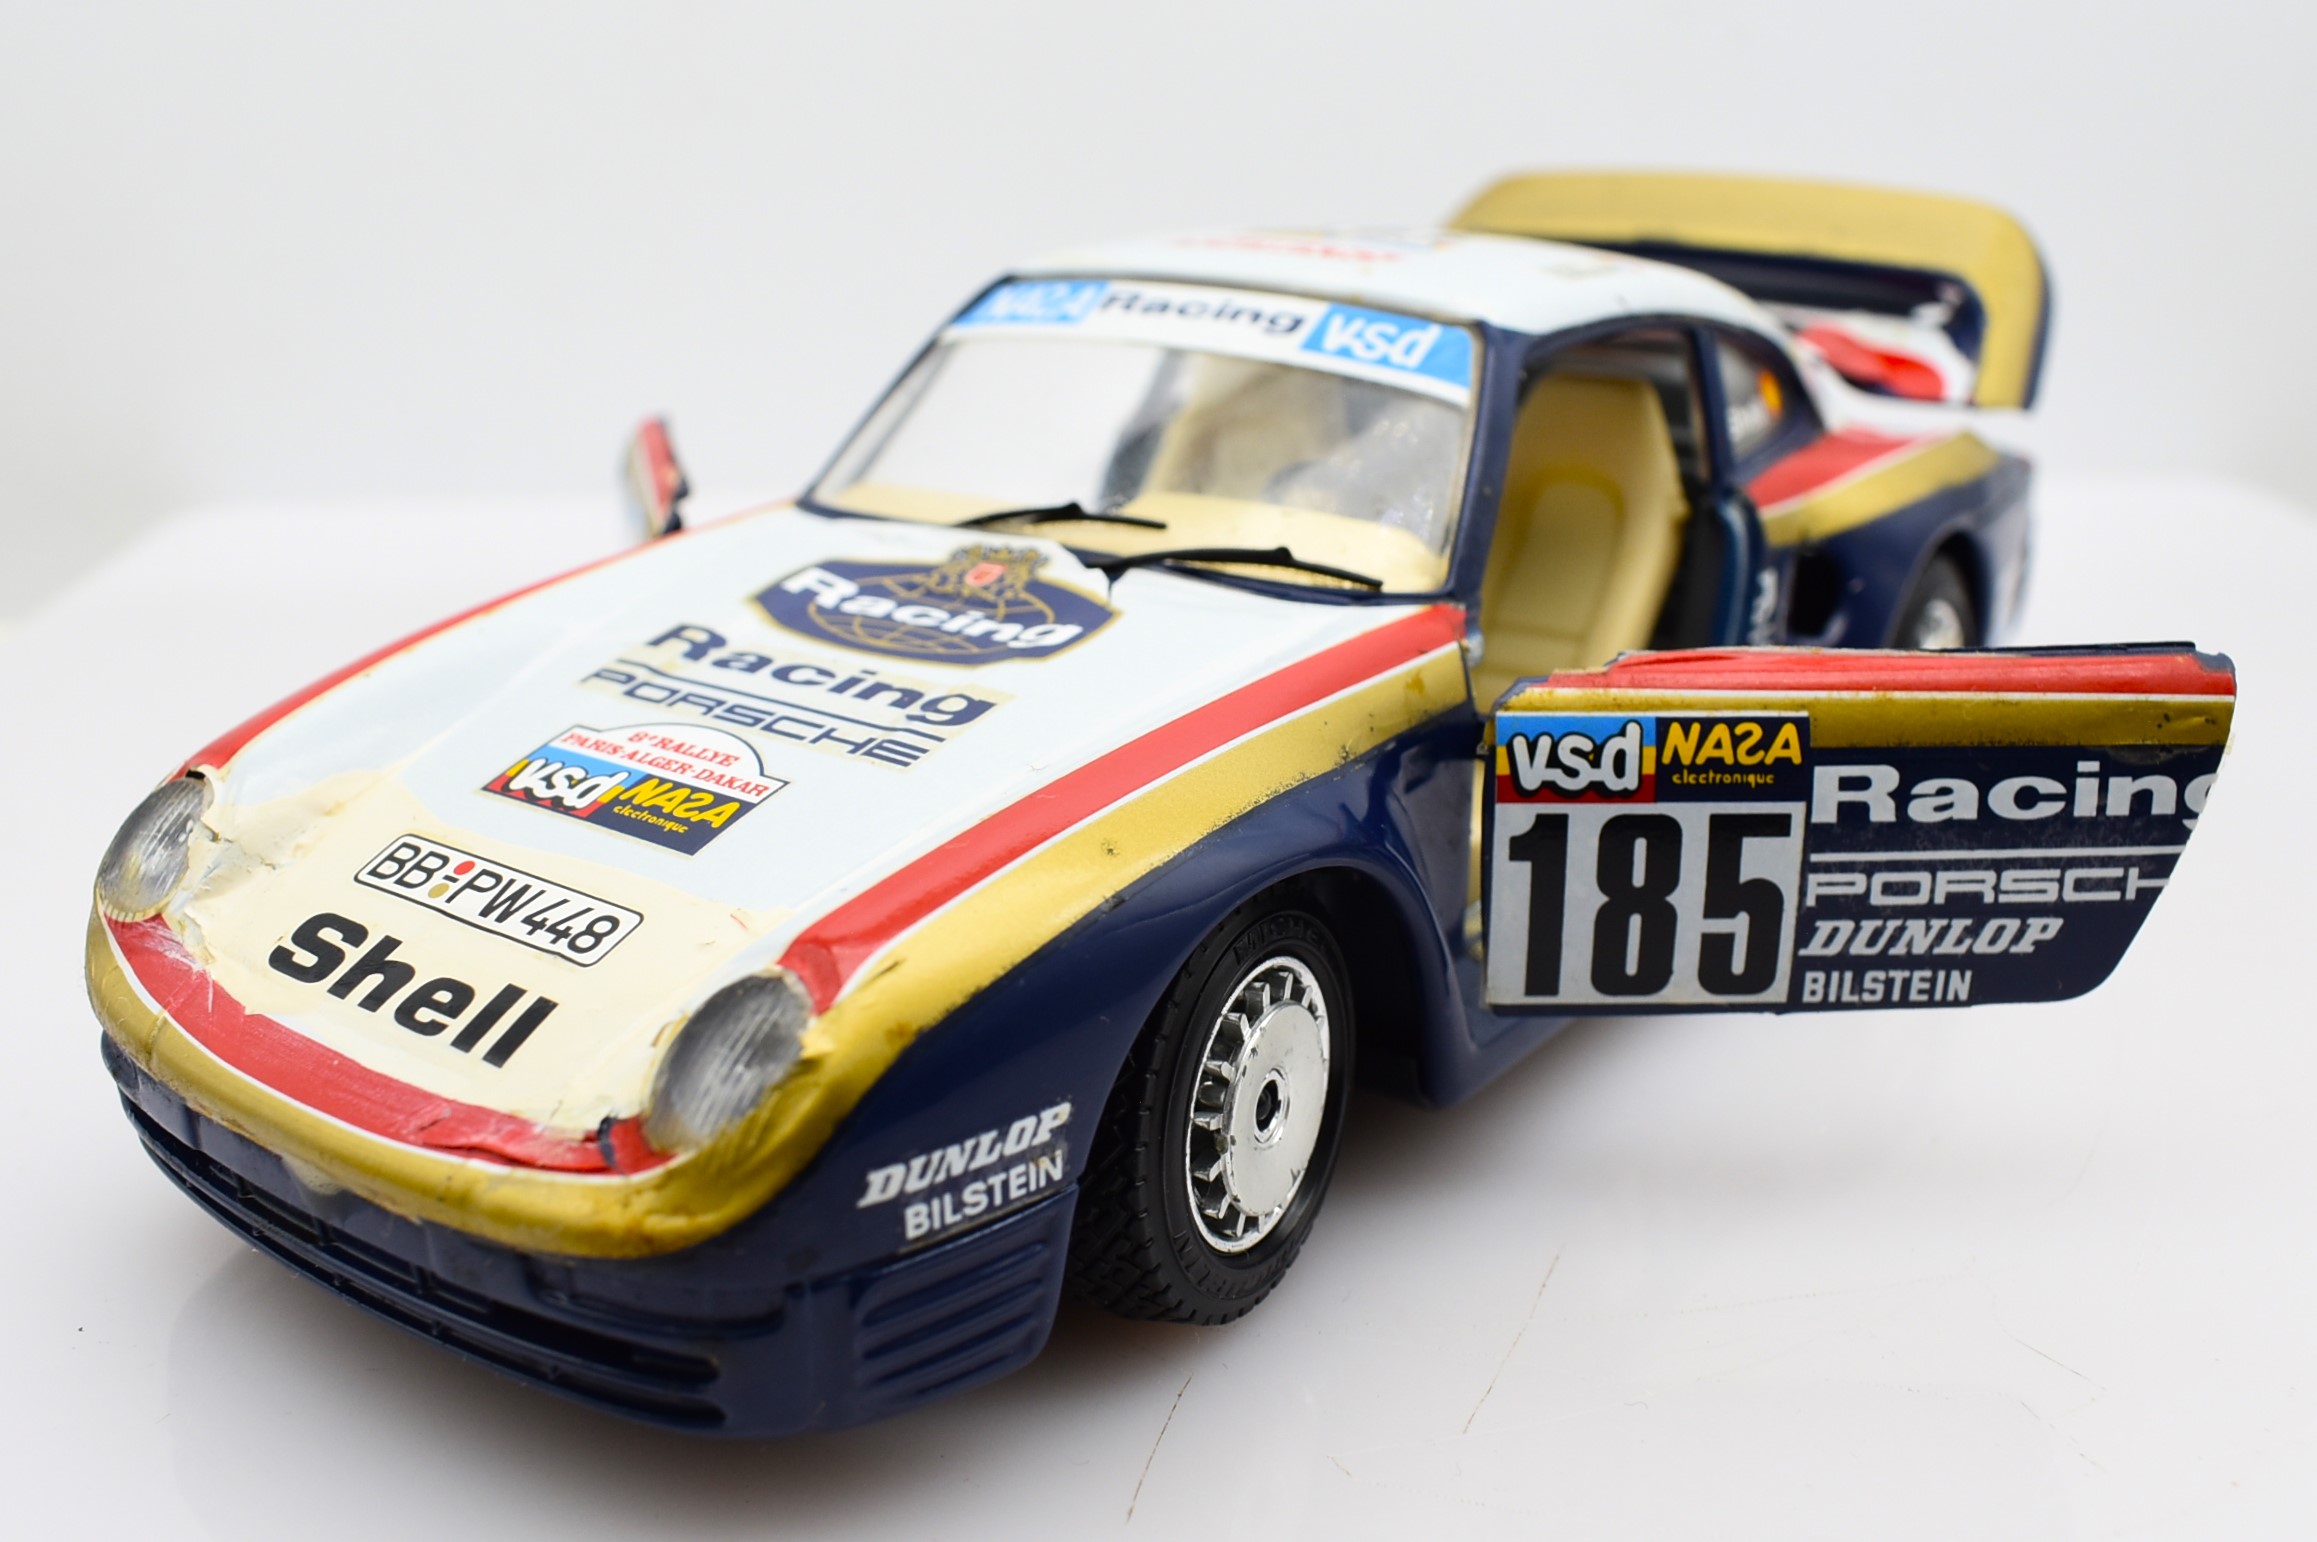 Rally model 1:24 scale Porsche 959 Burago diecast vehiclescollection